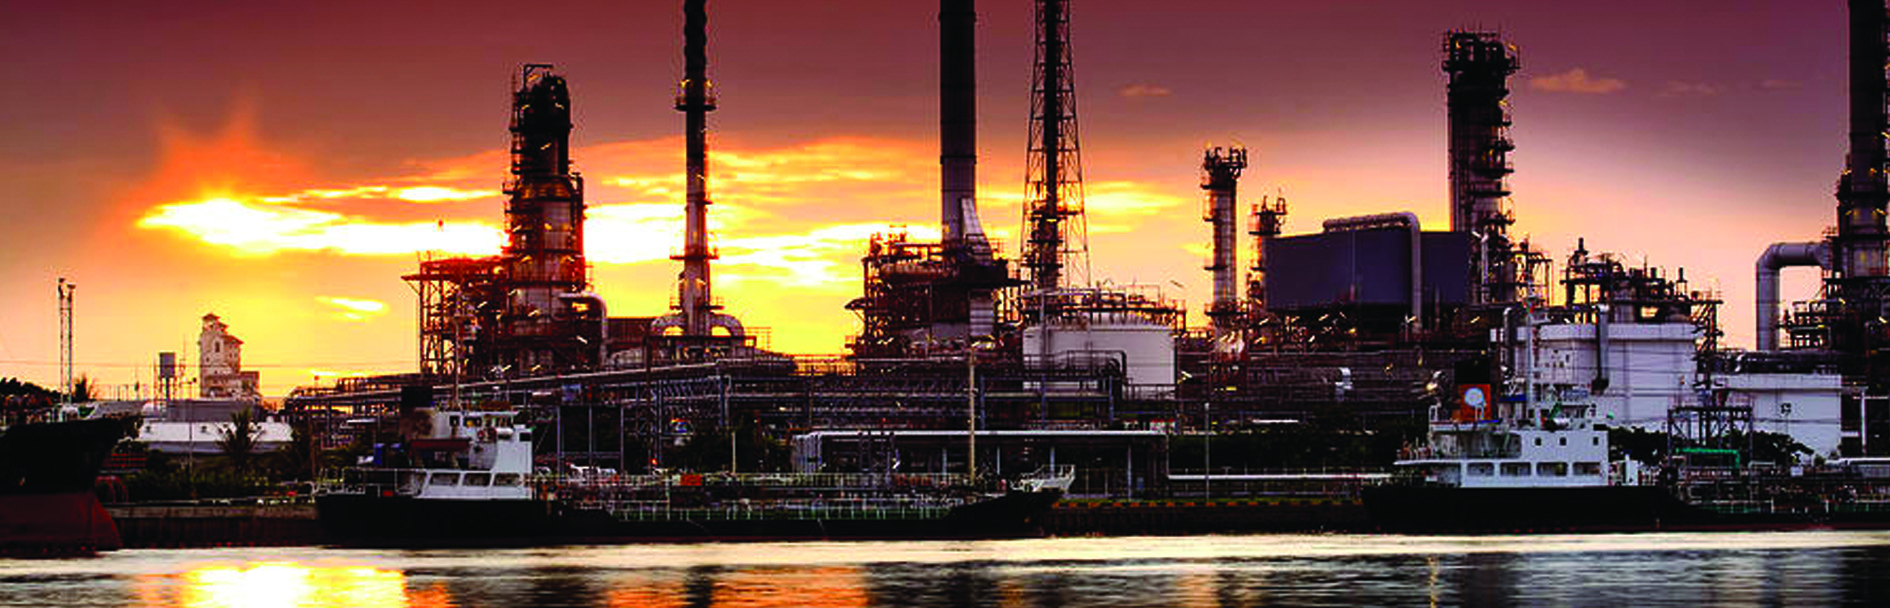 Oil_refinery.jpg